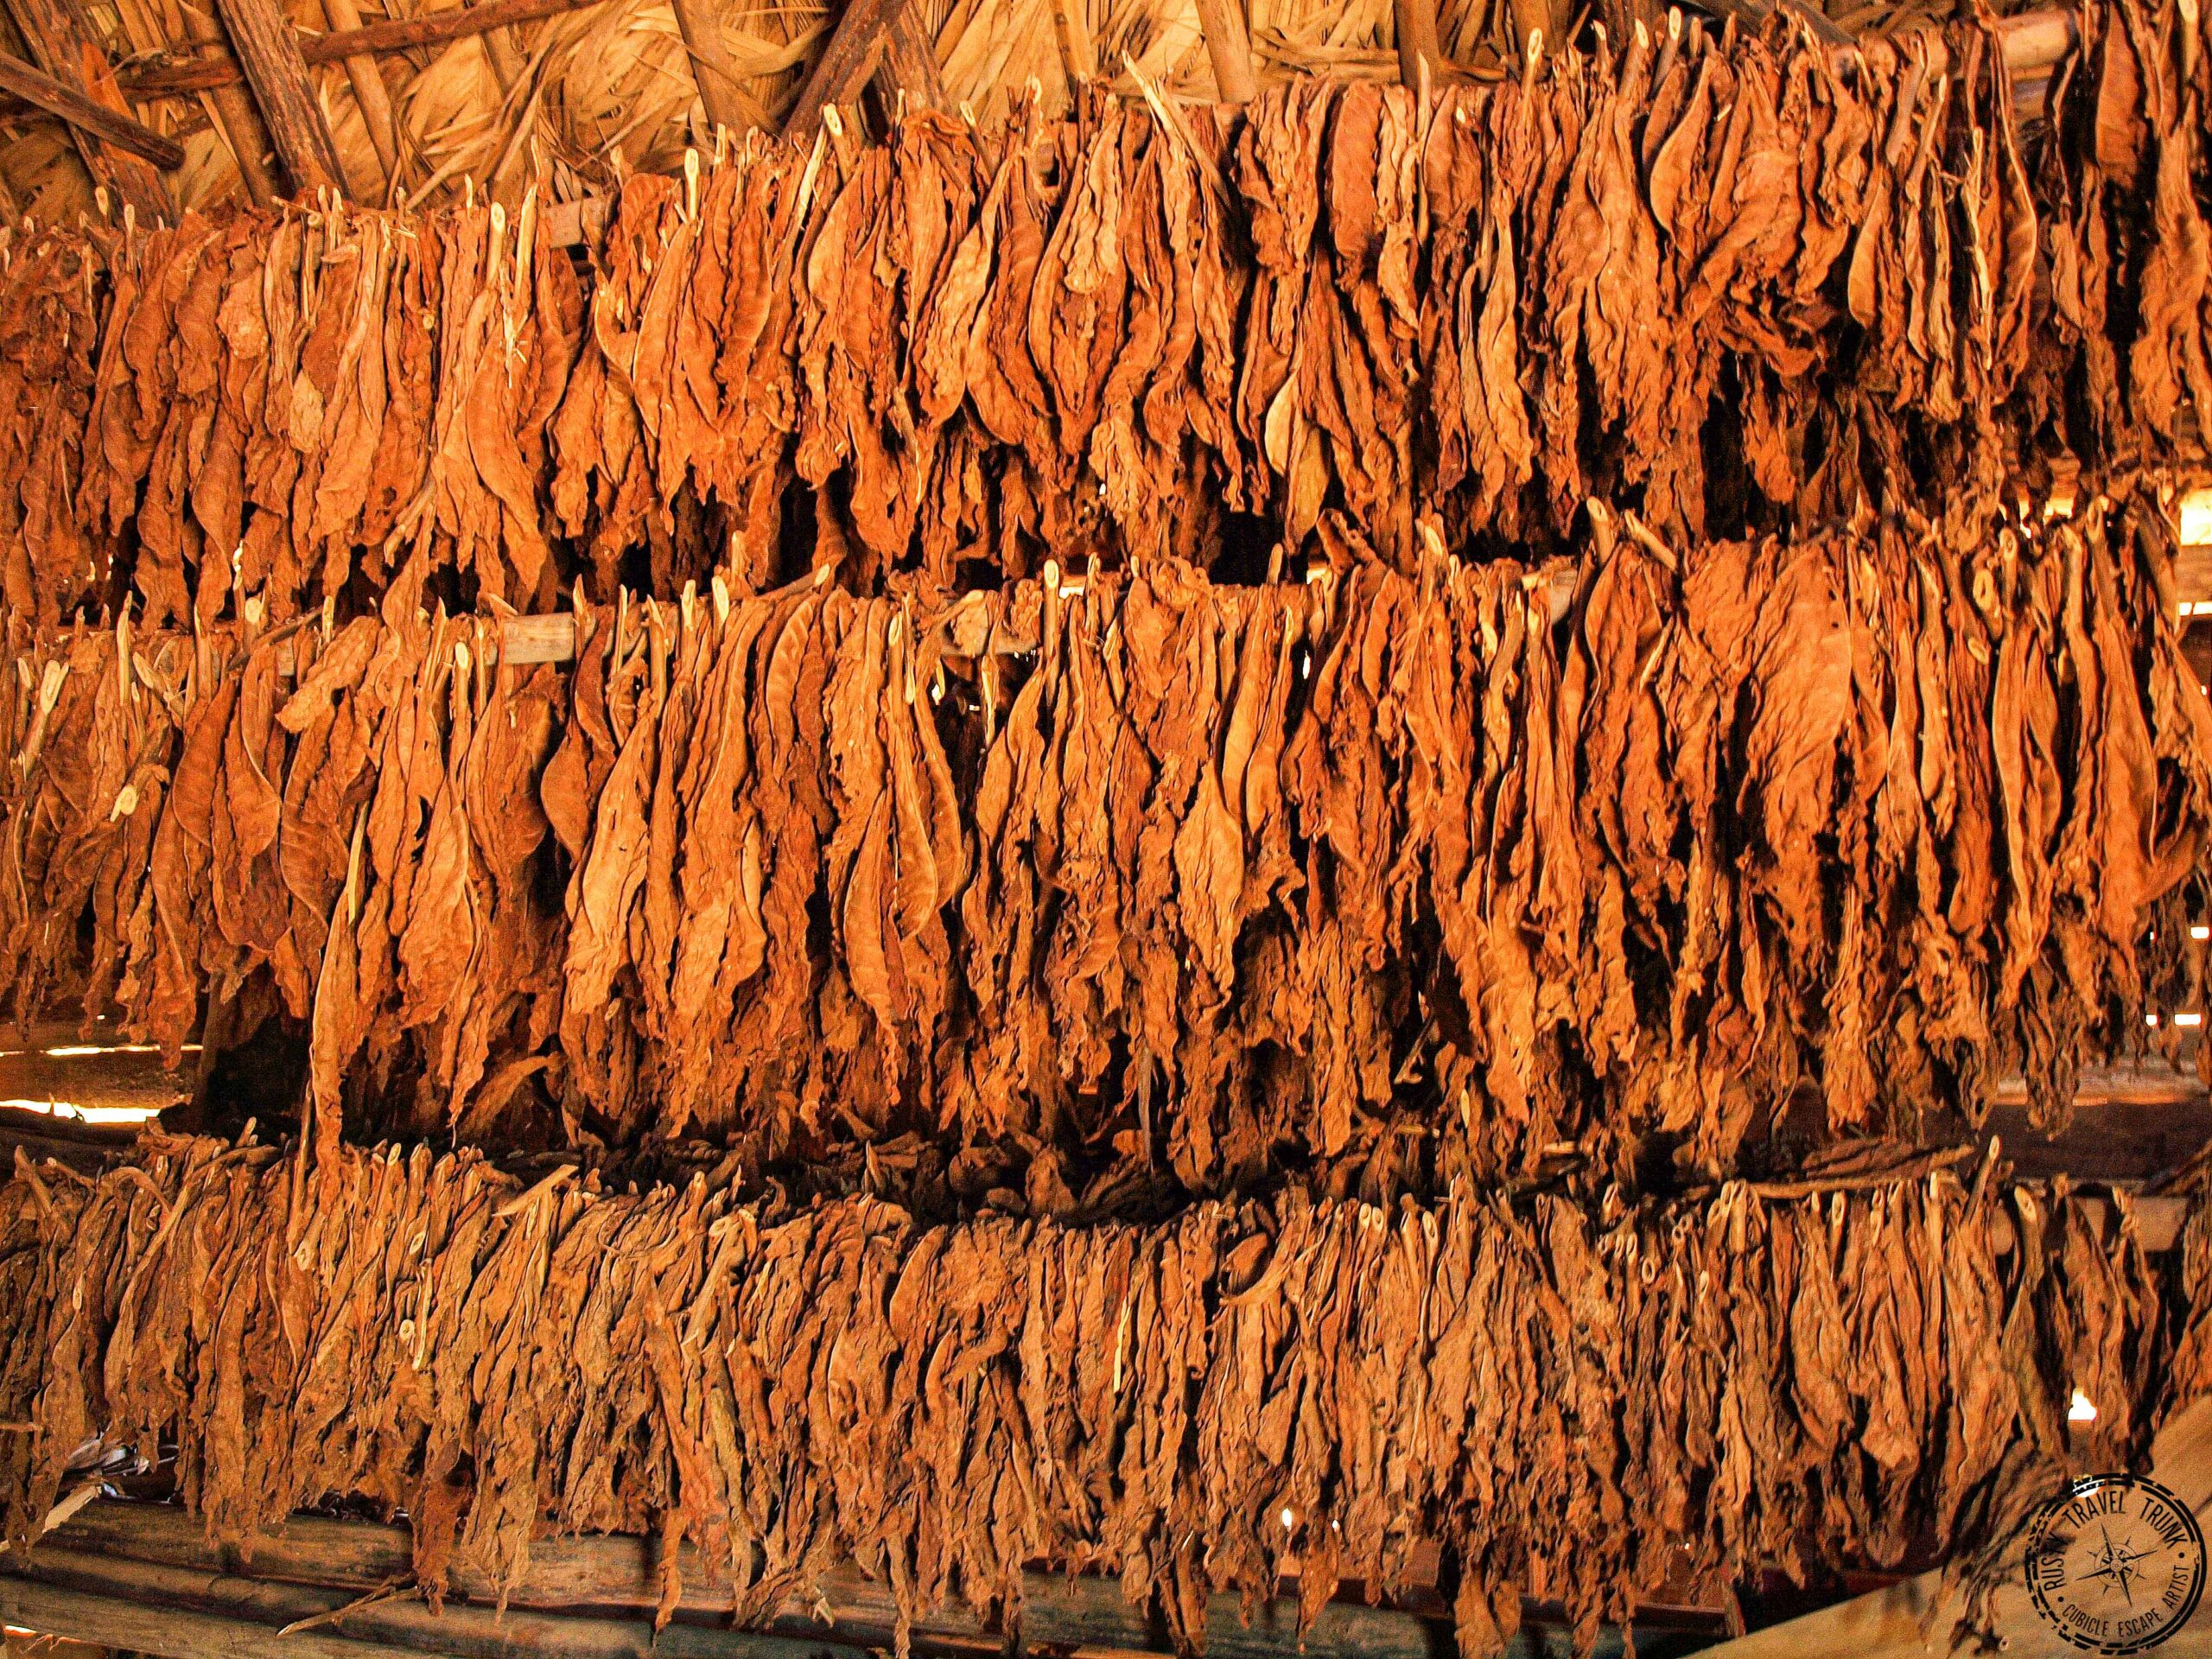 drying tobacco